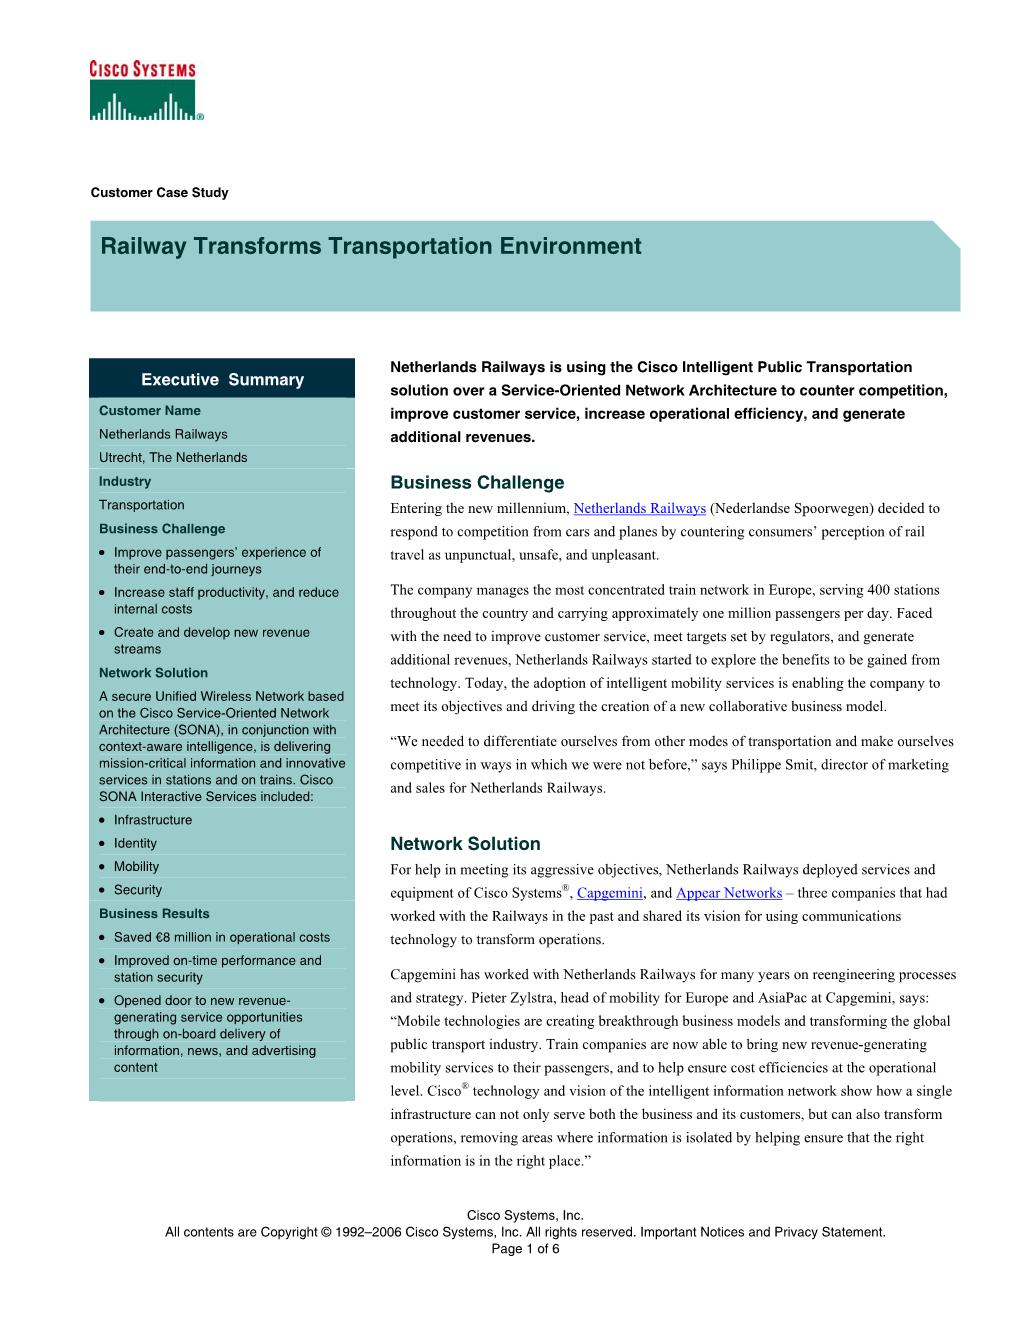 Railway Transforms Transportation Environment